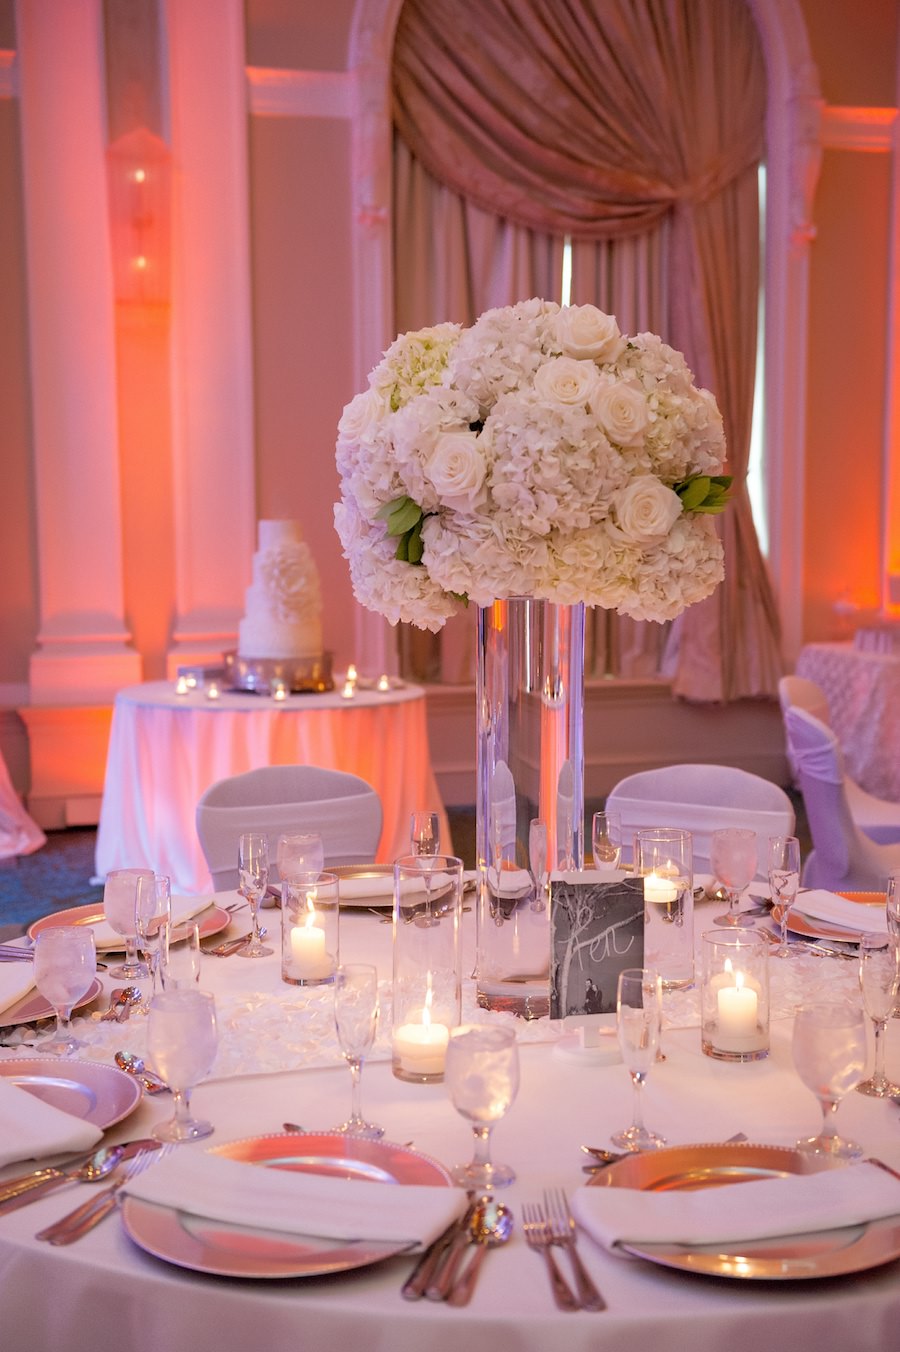 Elegant and Modern White Wedding Reception Decor Featuring White Hydrangea with White Rose Centerpieces at Vinoy Renaissance Hotel | St Pete Wedding Venue Vinoy Renaissance Hotel